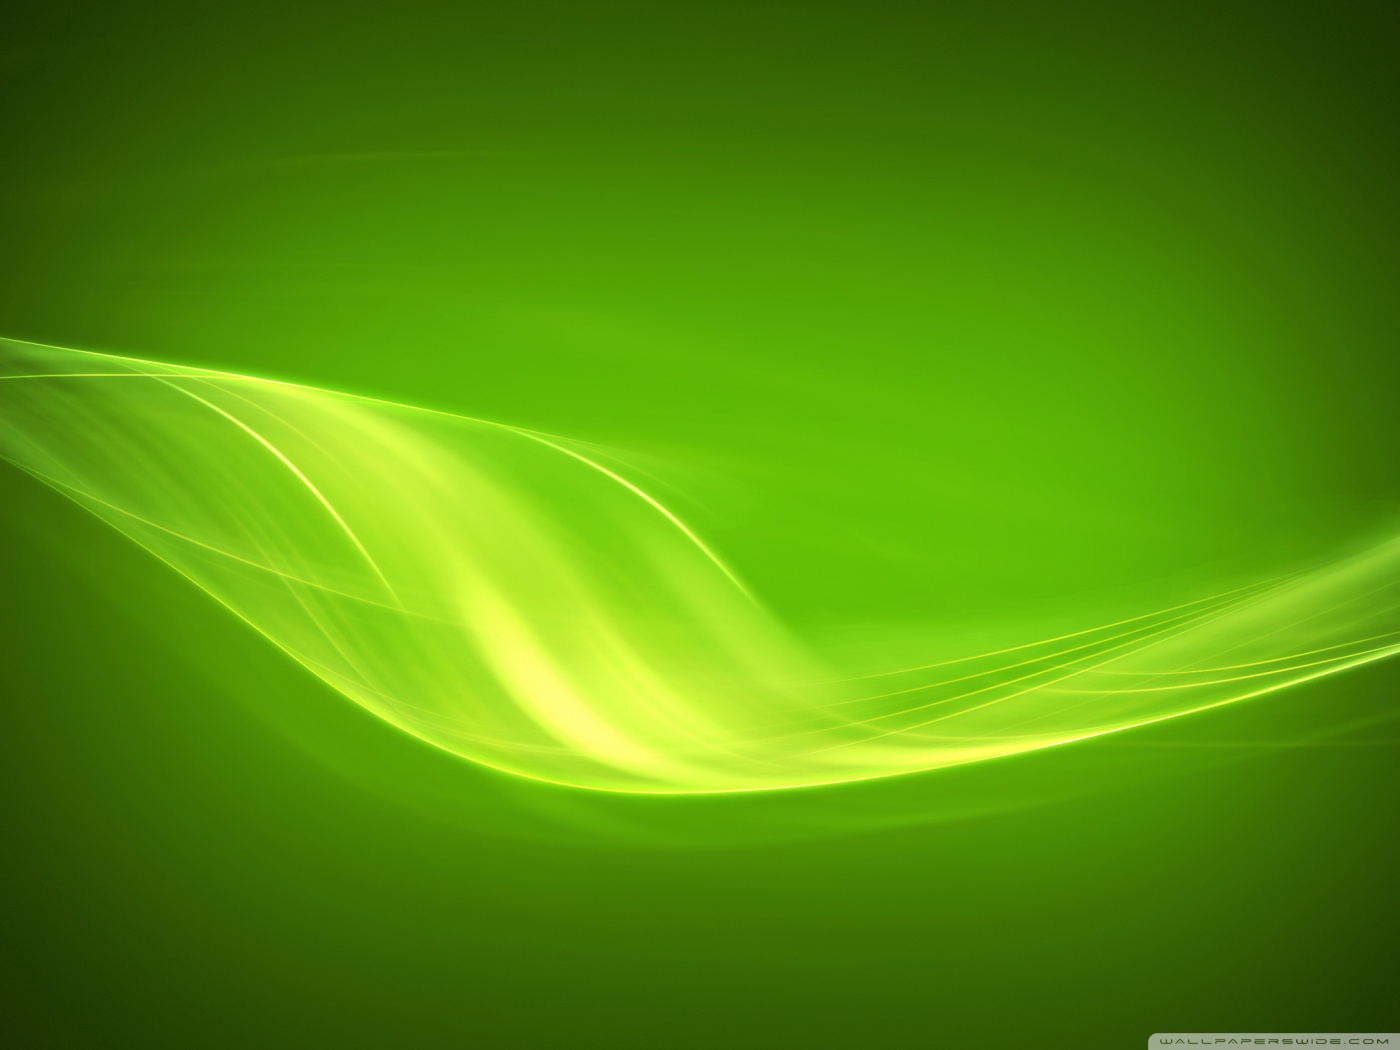 Green Image